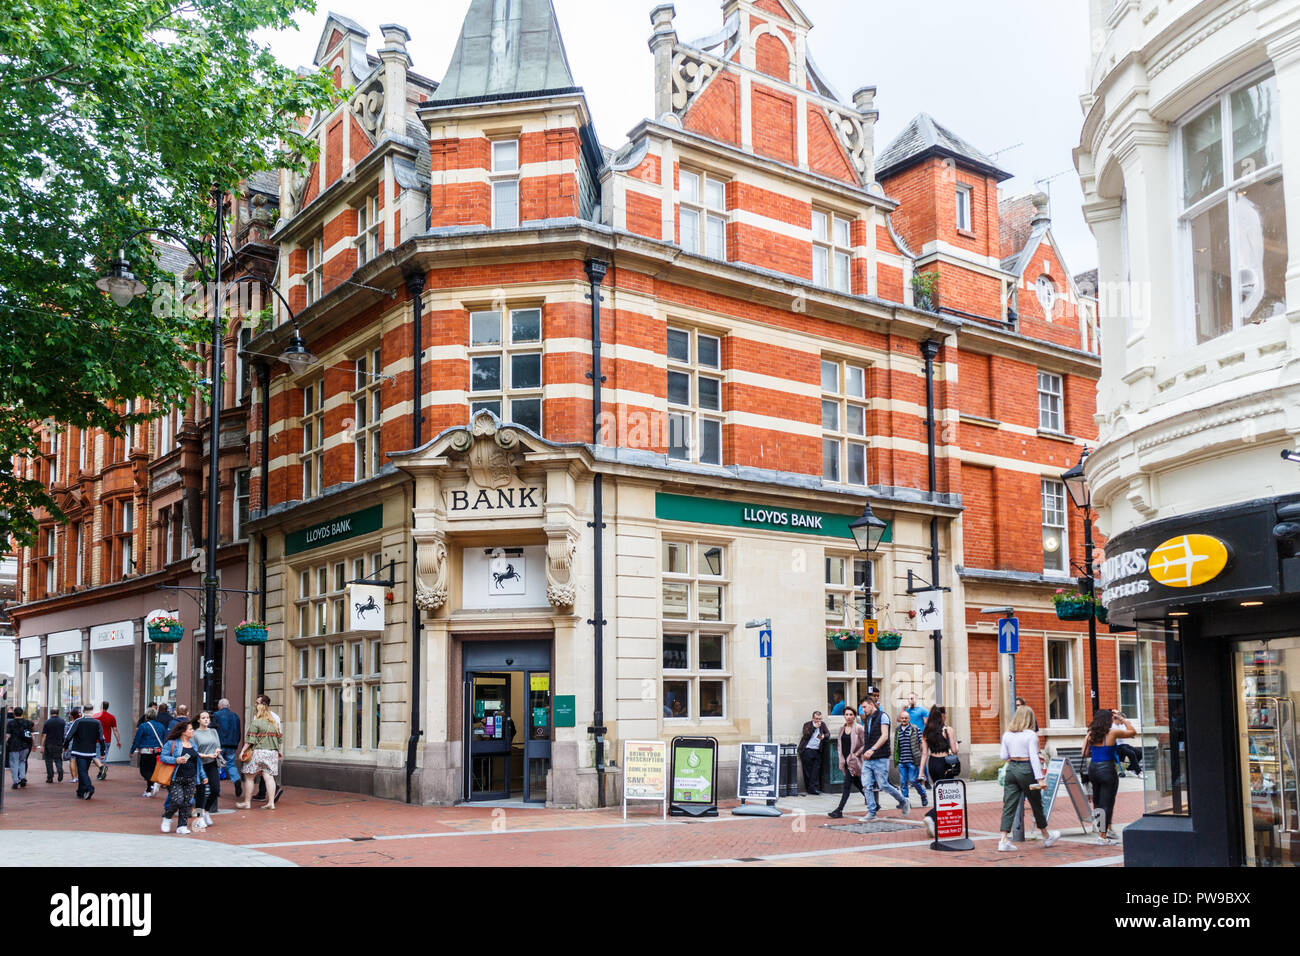 Reading, England - 1st June 2018: People walking past Lloyds Bank. Llotds is an old established UK bank. Stock Photo